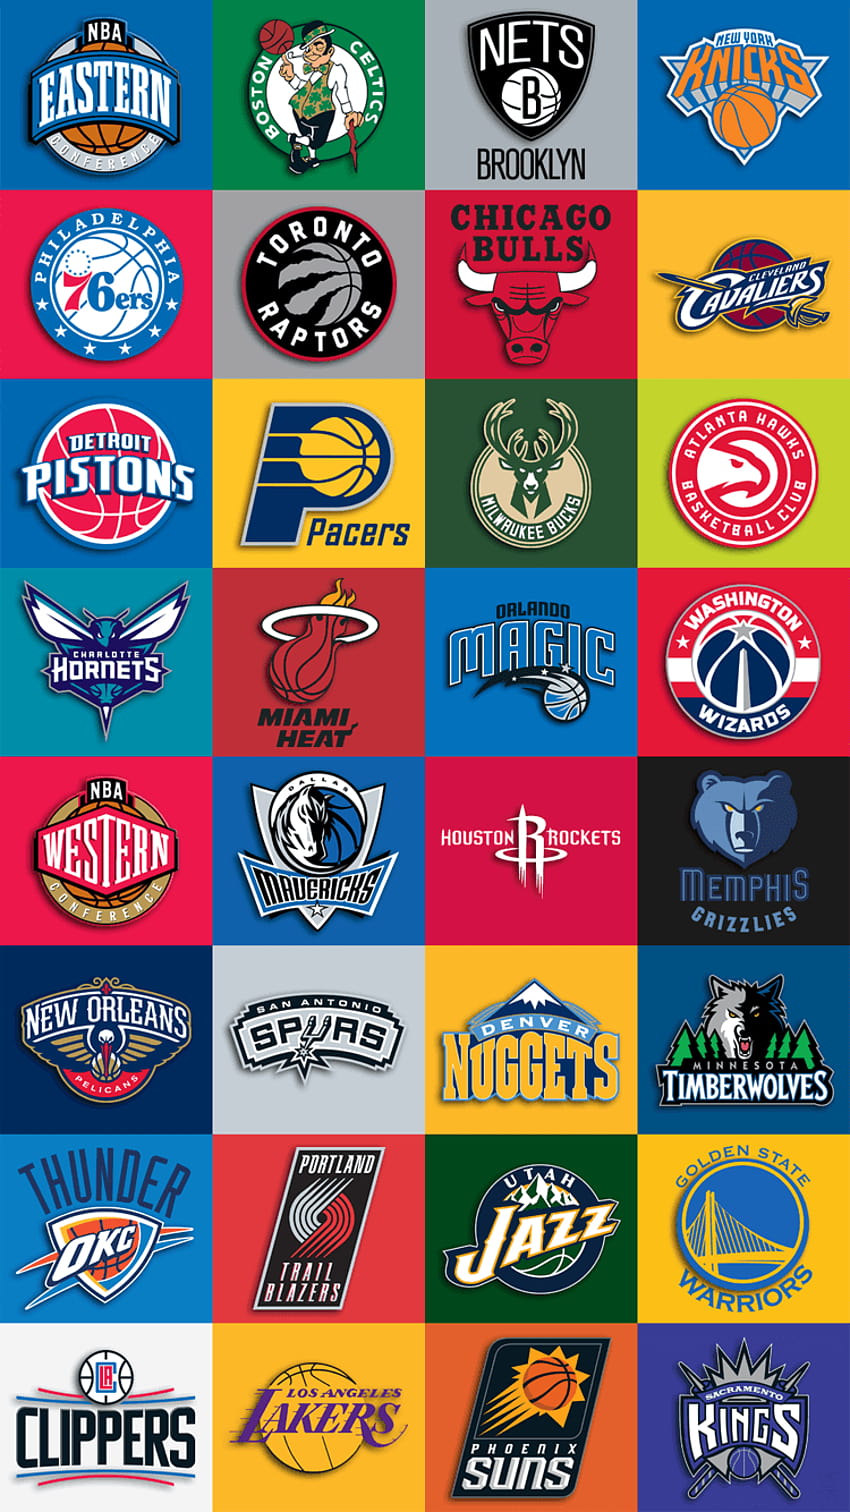 Charlotte Hornets (NBA) iPhone 6/7/8 Lock Screen Wallpaper…